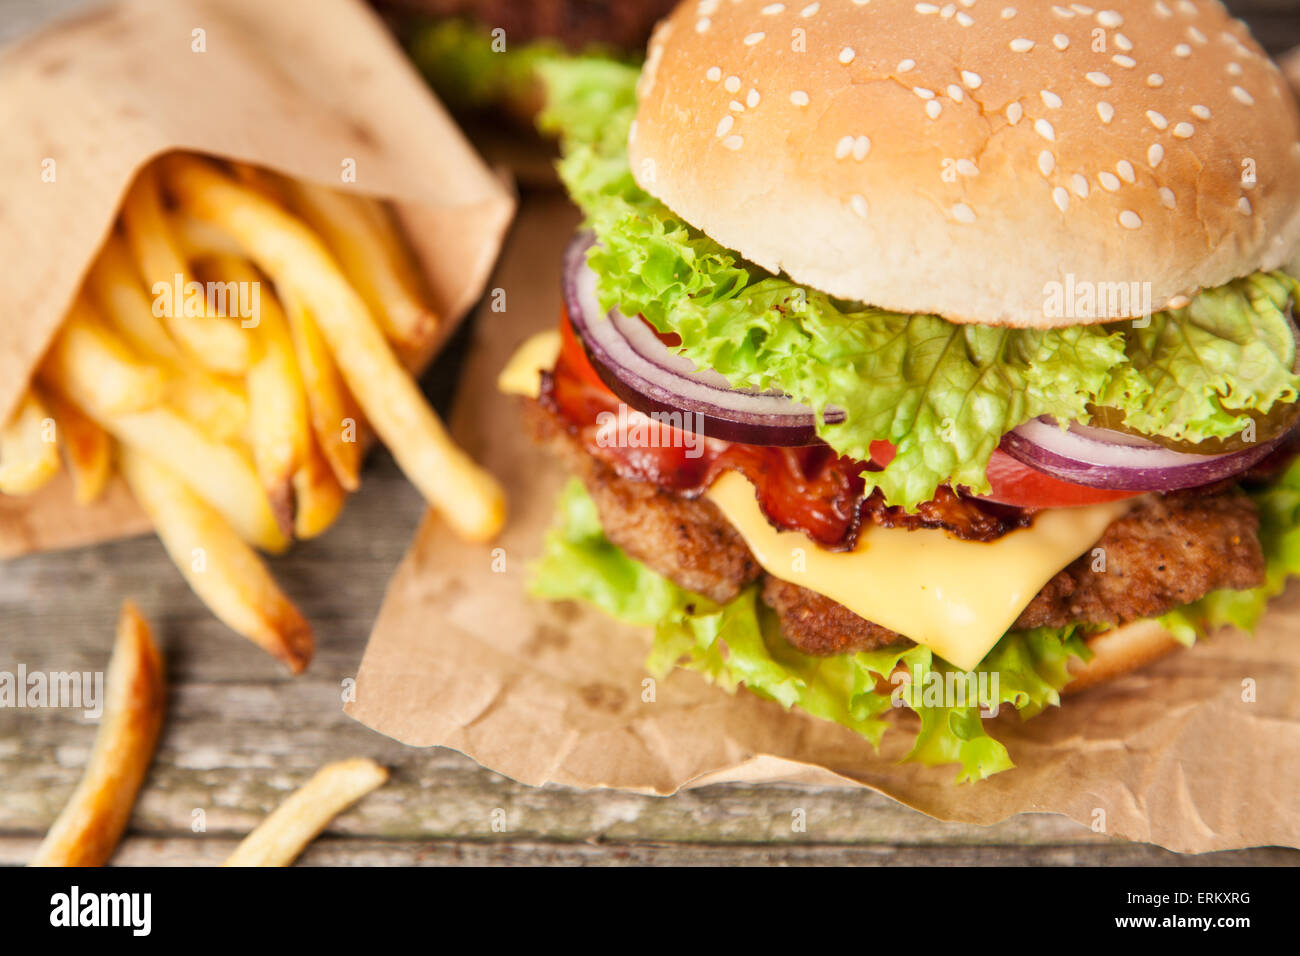 Delicious hamburger and fries Stock Photo